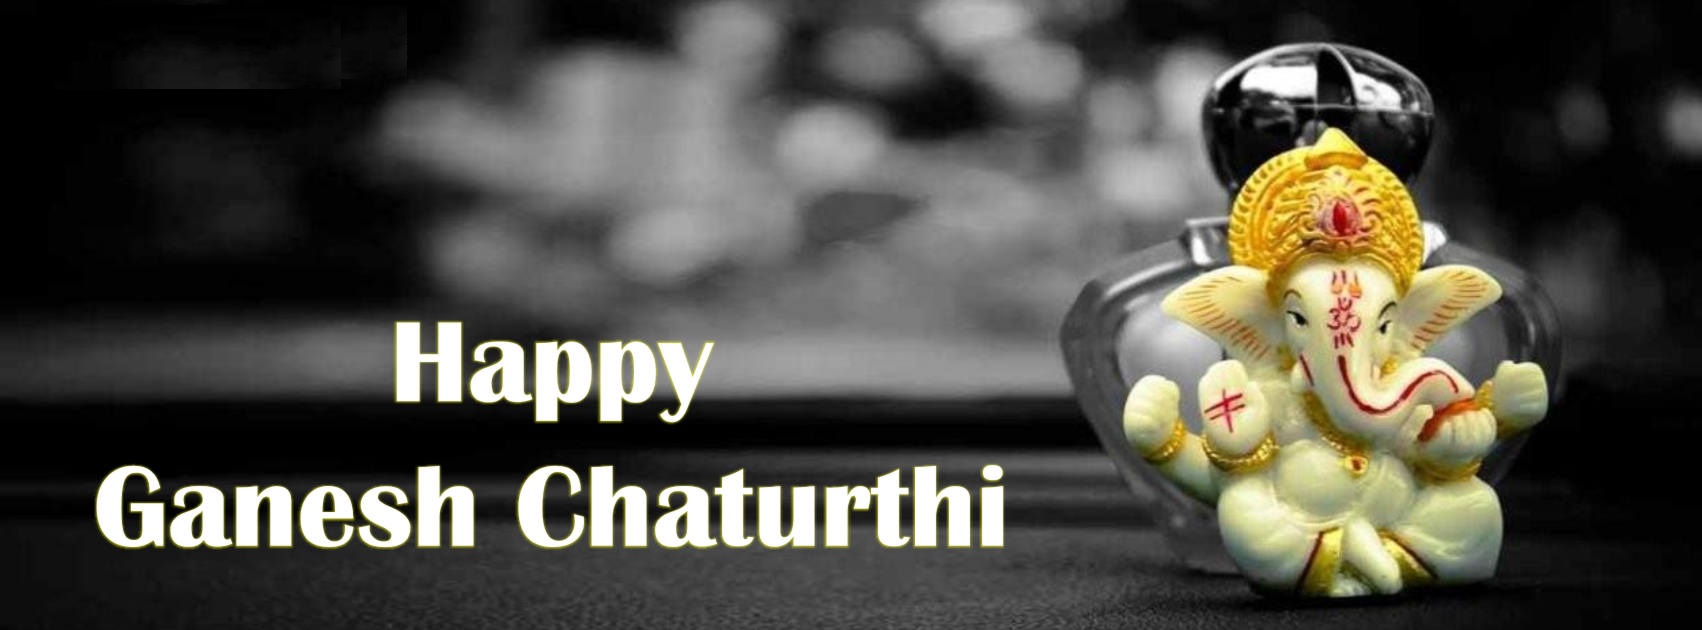 Download Happy Vinayaka/ Ganesh Chaturthi Facebook Cover Photos